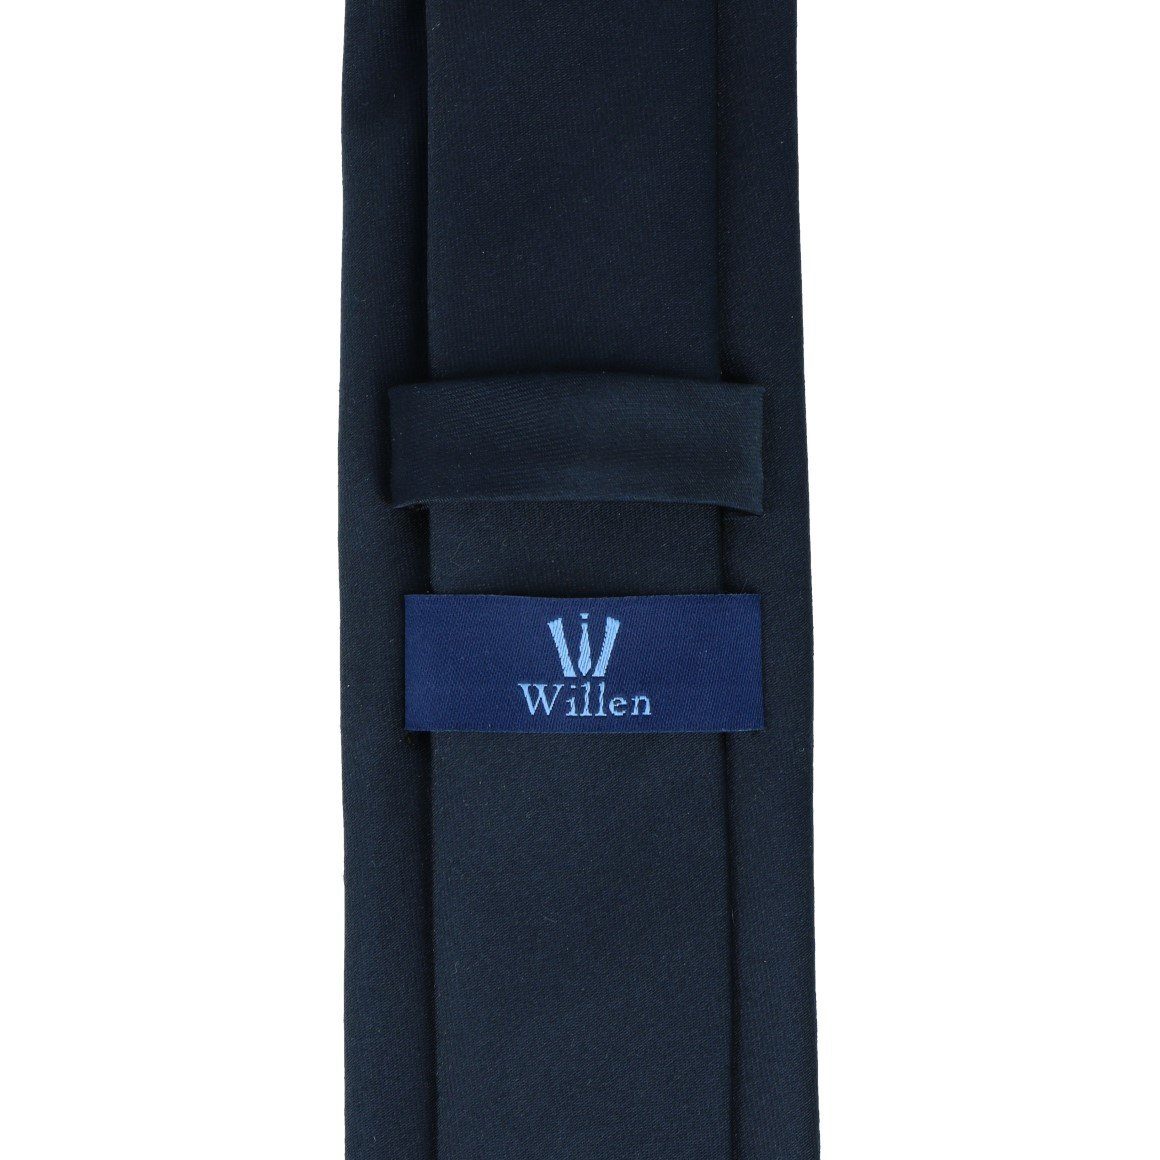 Krawatte/Fliege & WILLEN Weste, Hemd